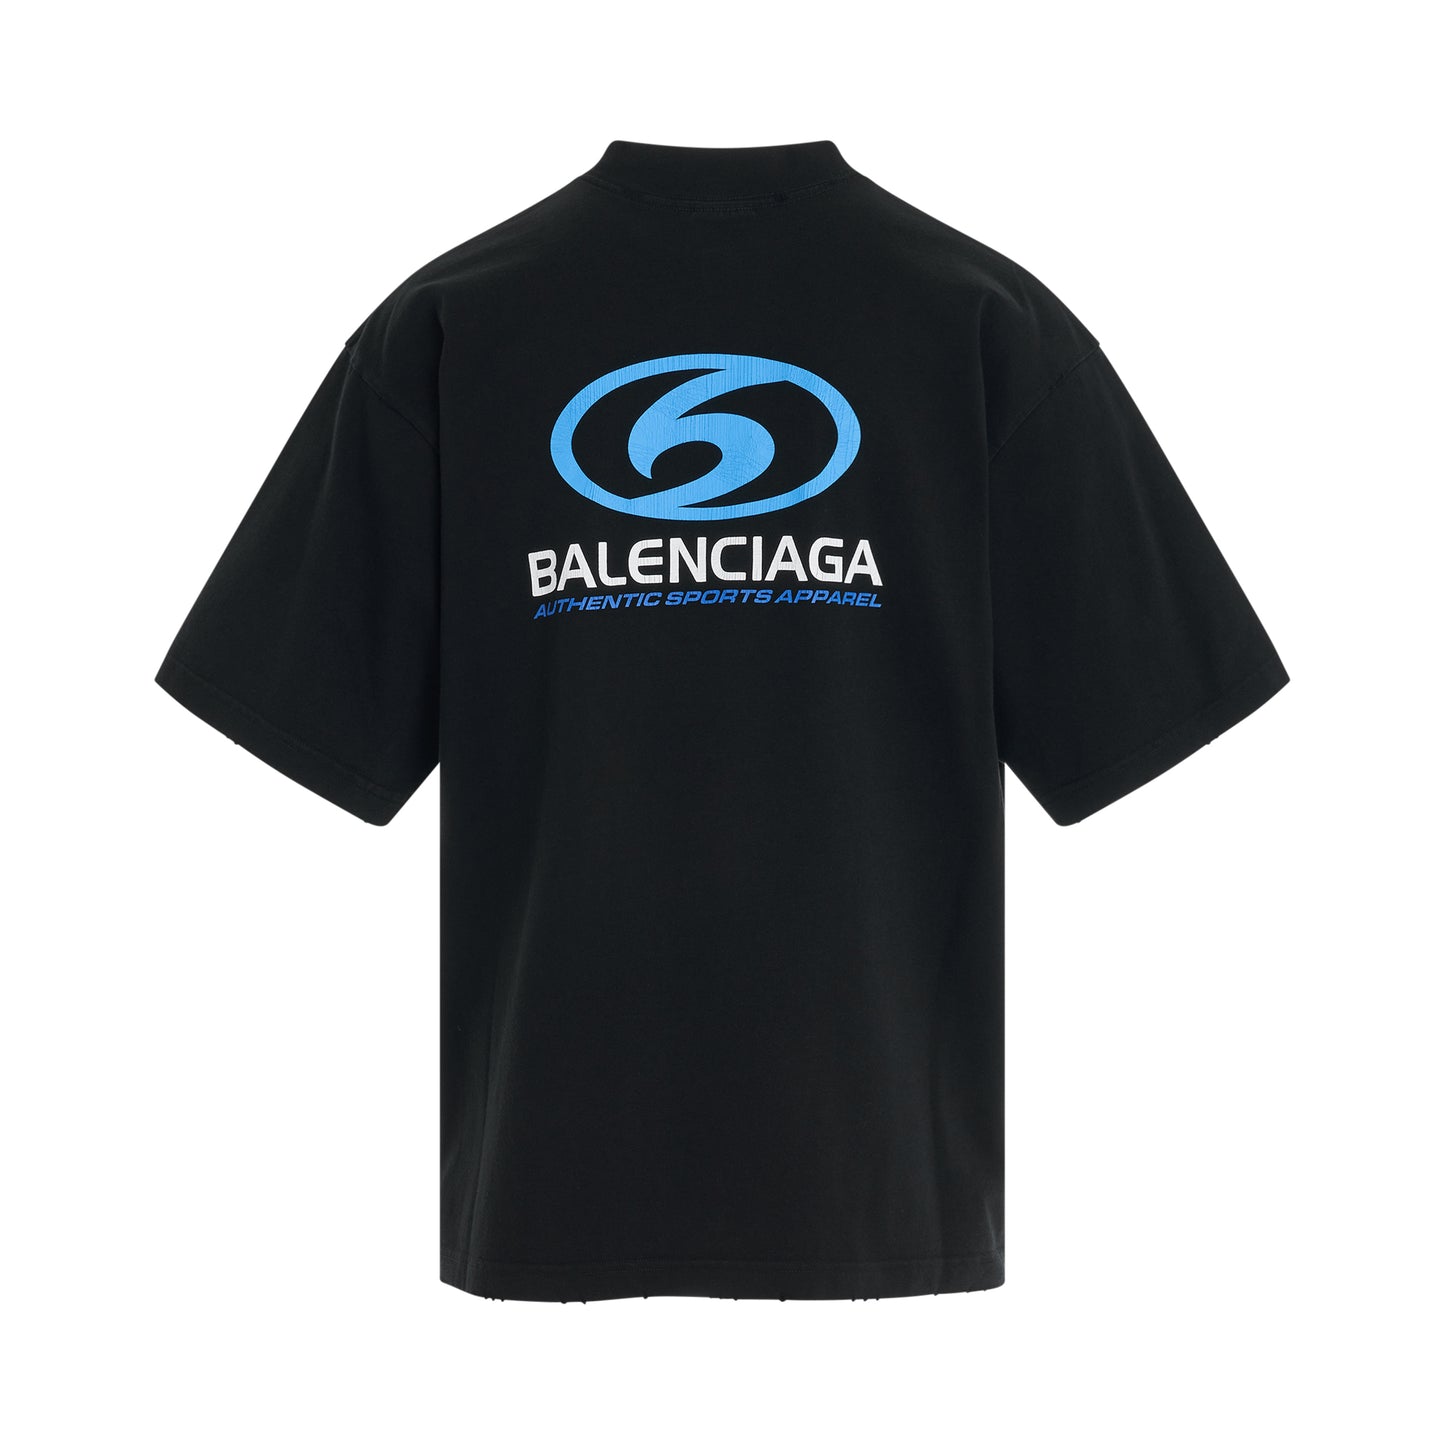 Surfer Cracked Logo T-Shirt in Black/Blue